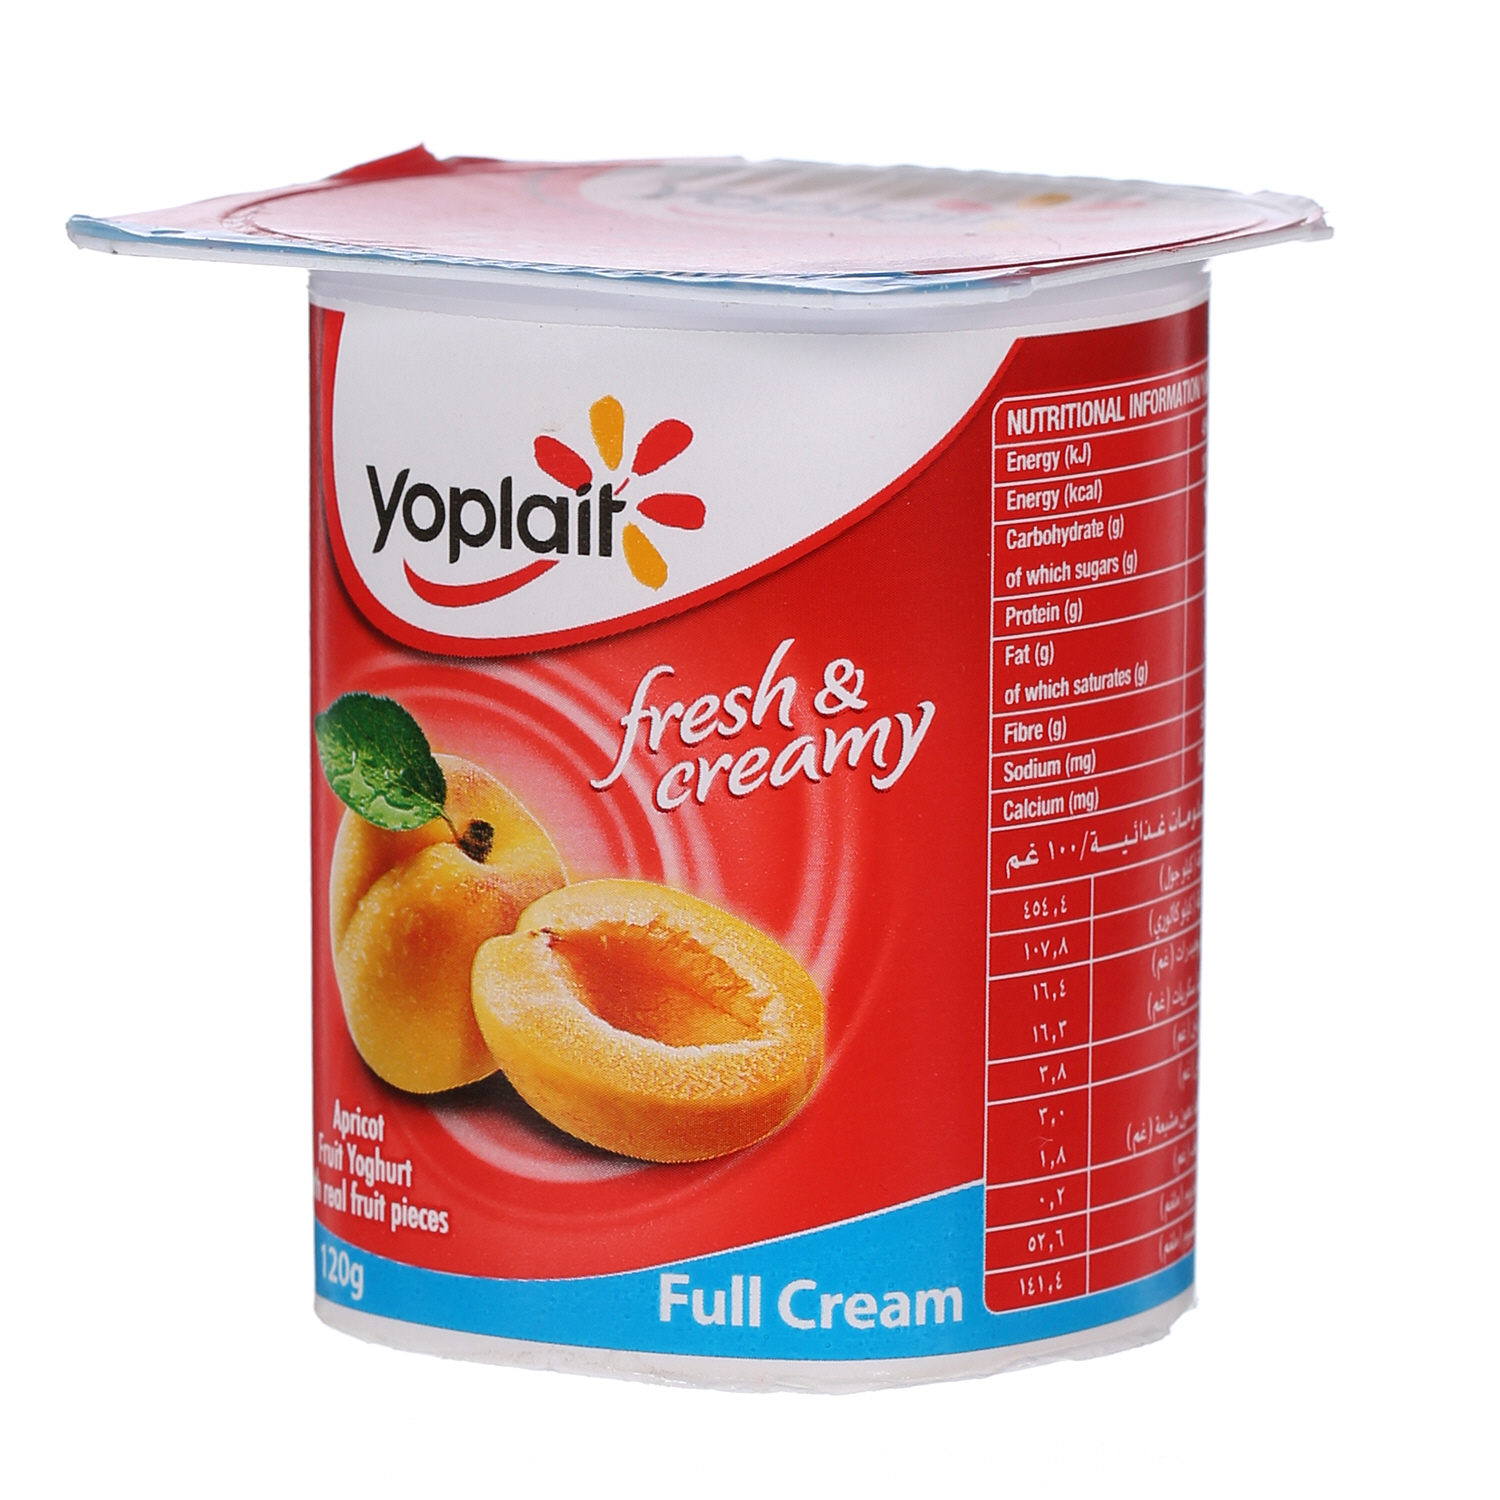 Yoplait Flavoured Yoghurt Apricot Full Fat 120 g